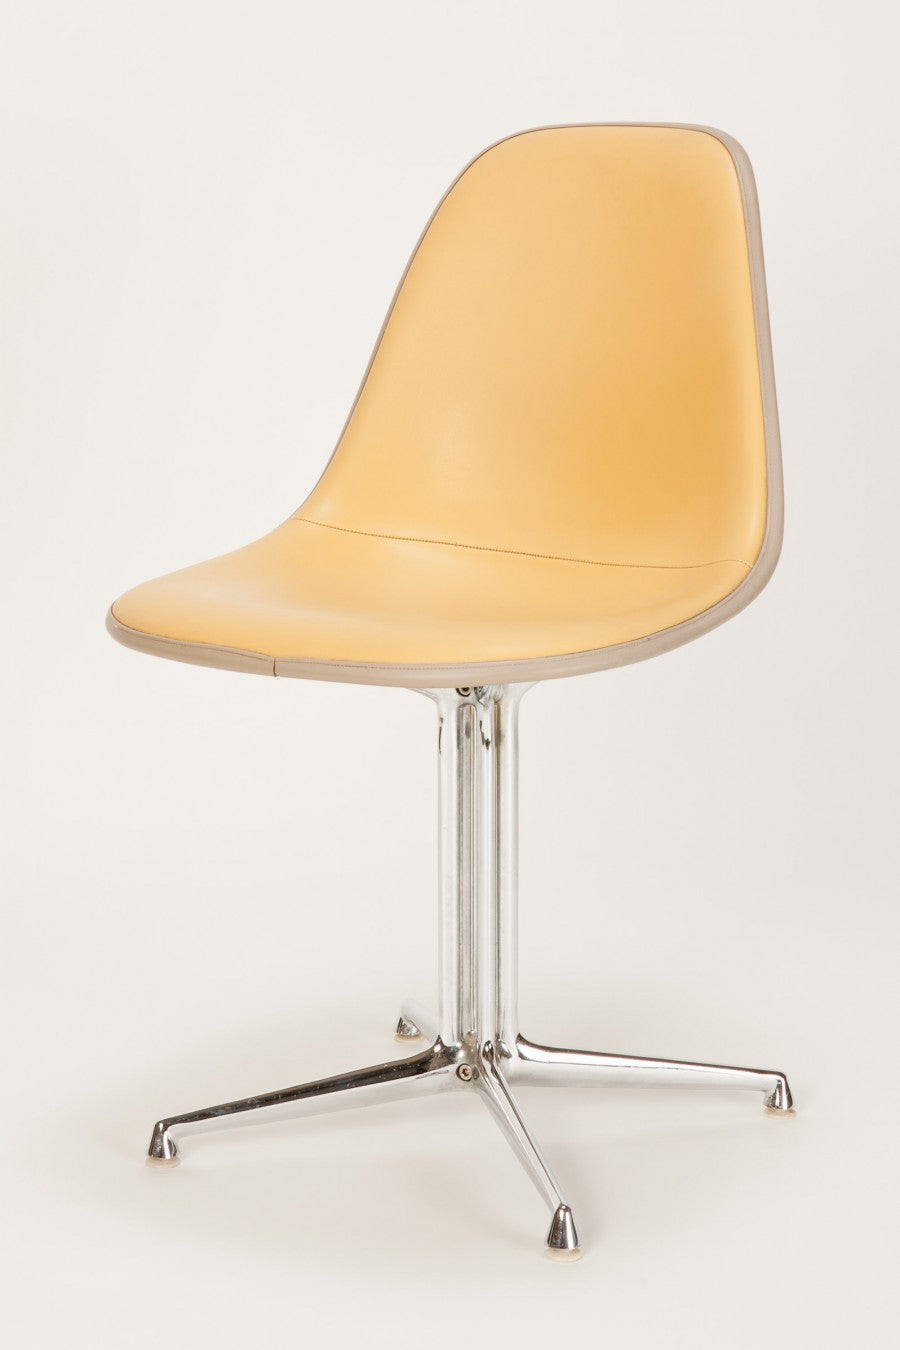 Einzelner Leder Eames La Fonda Stuhl von Charles & Ray Eames